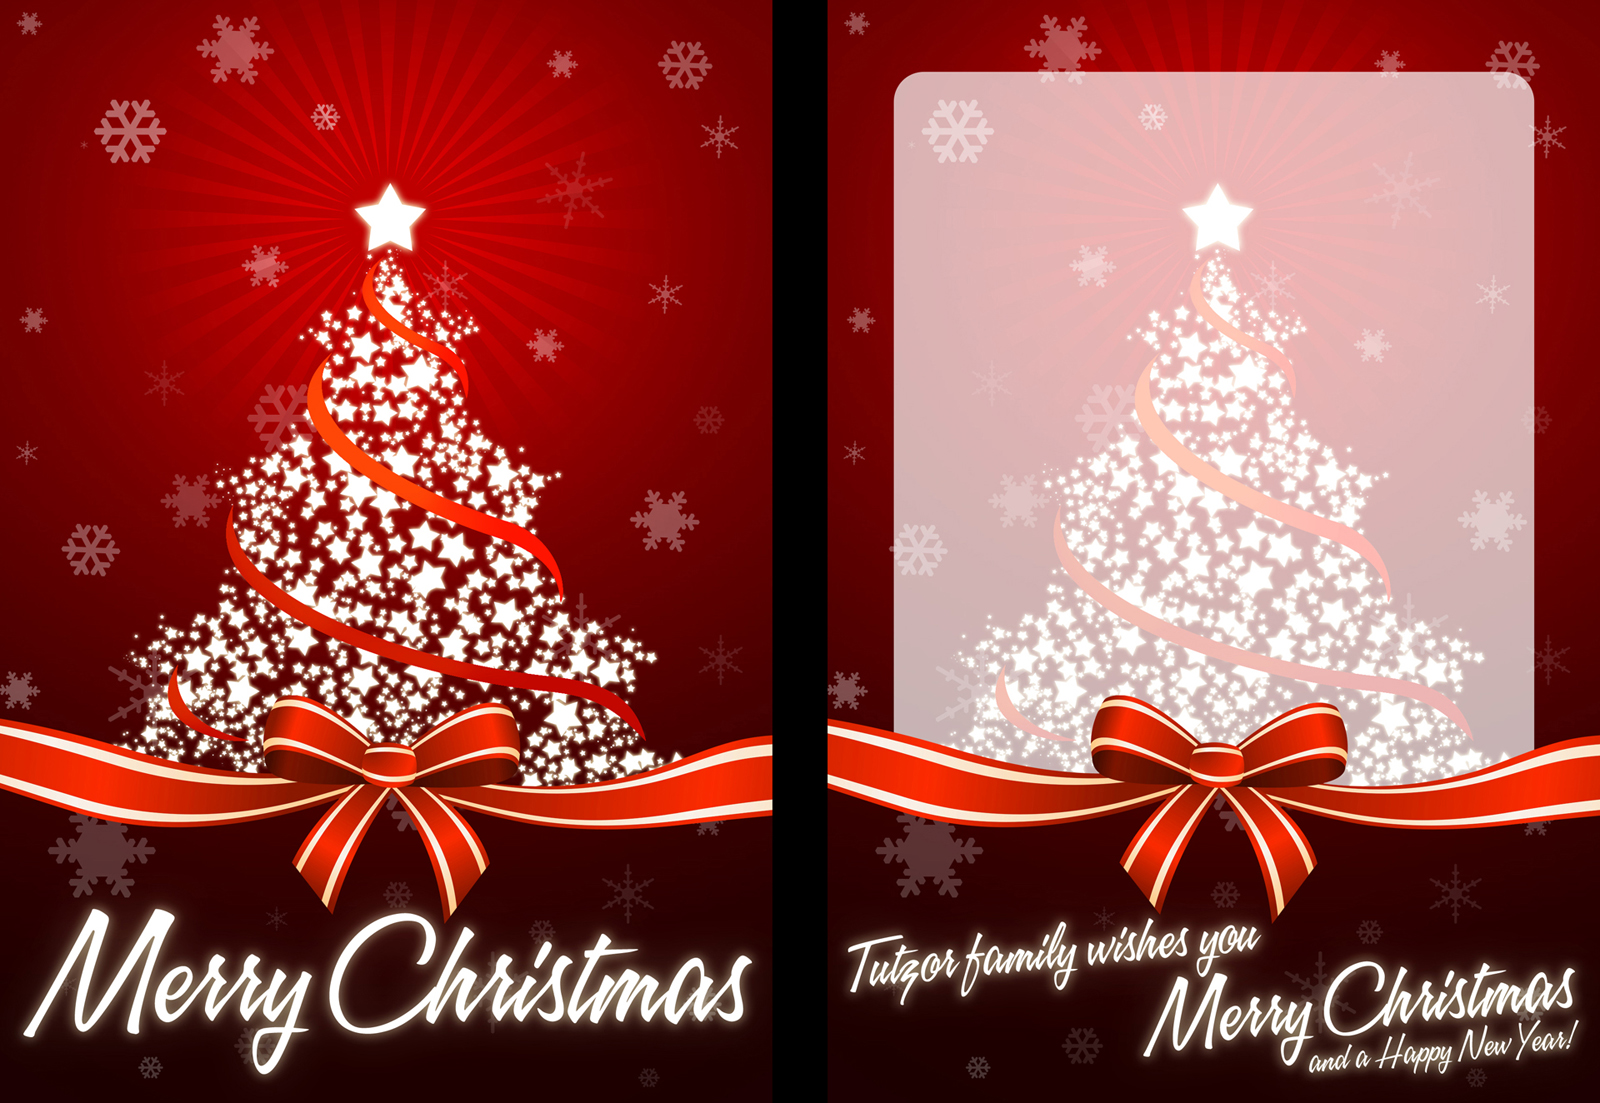 Christmas Wishes Photos Cards | christmaswishes123